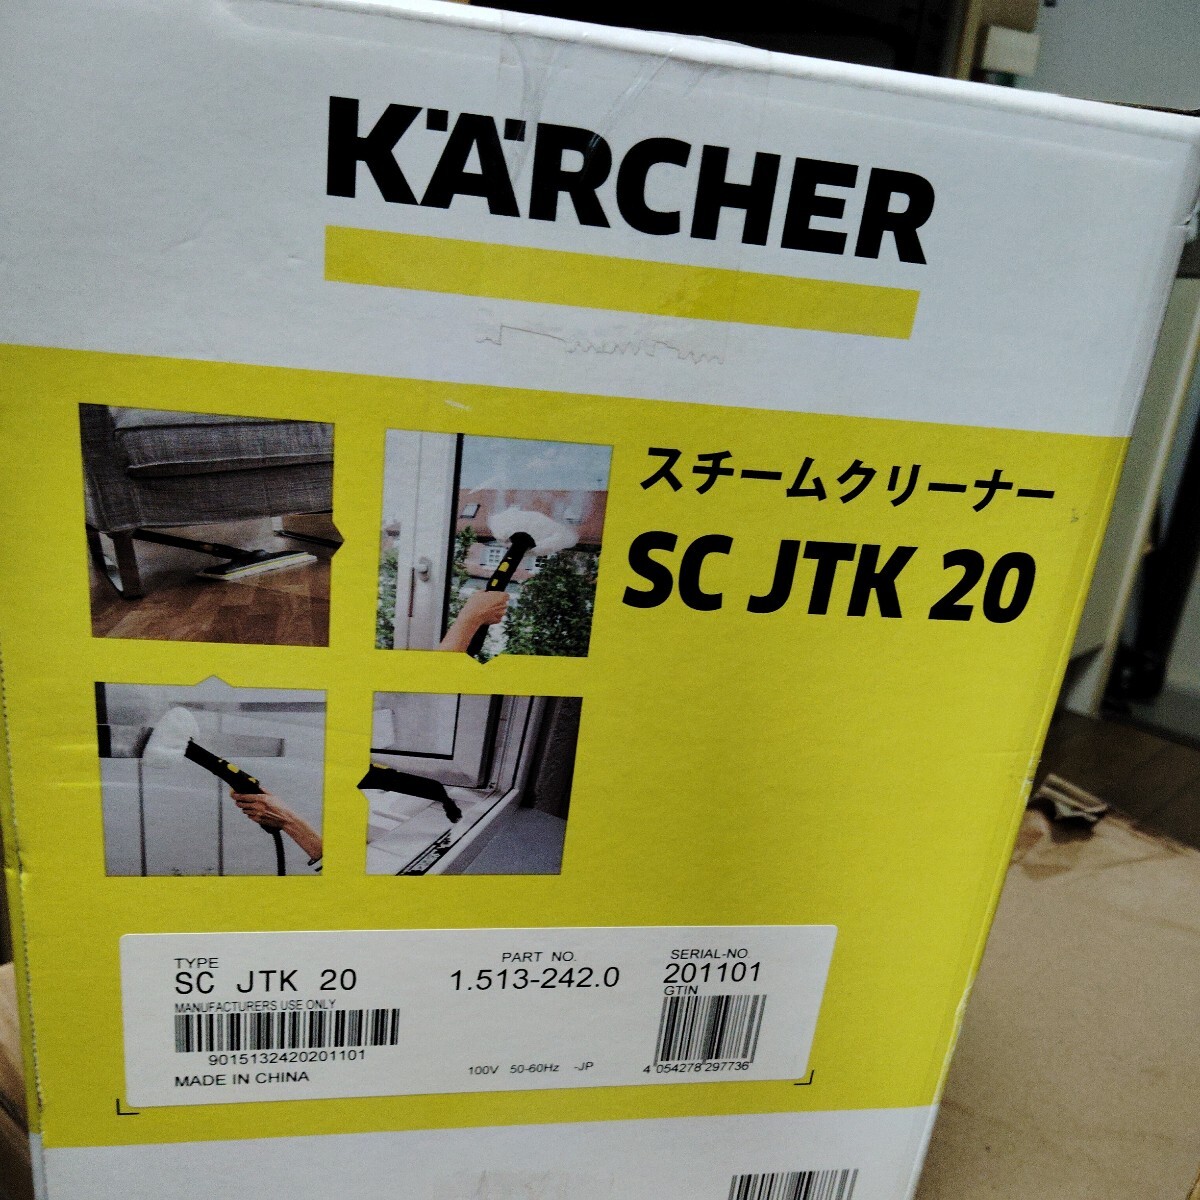  Karcher steam cleaner SC JTK 20